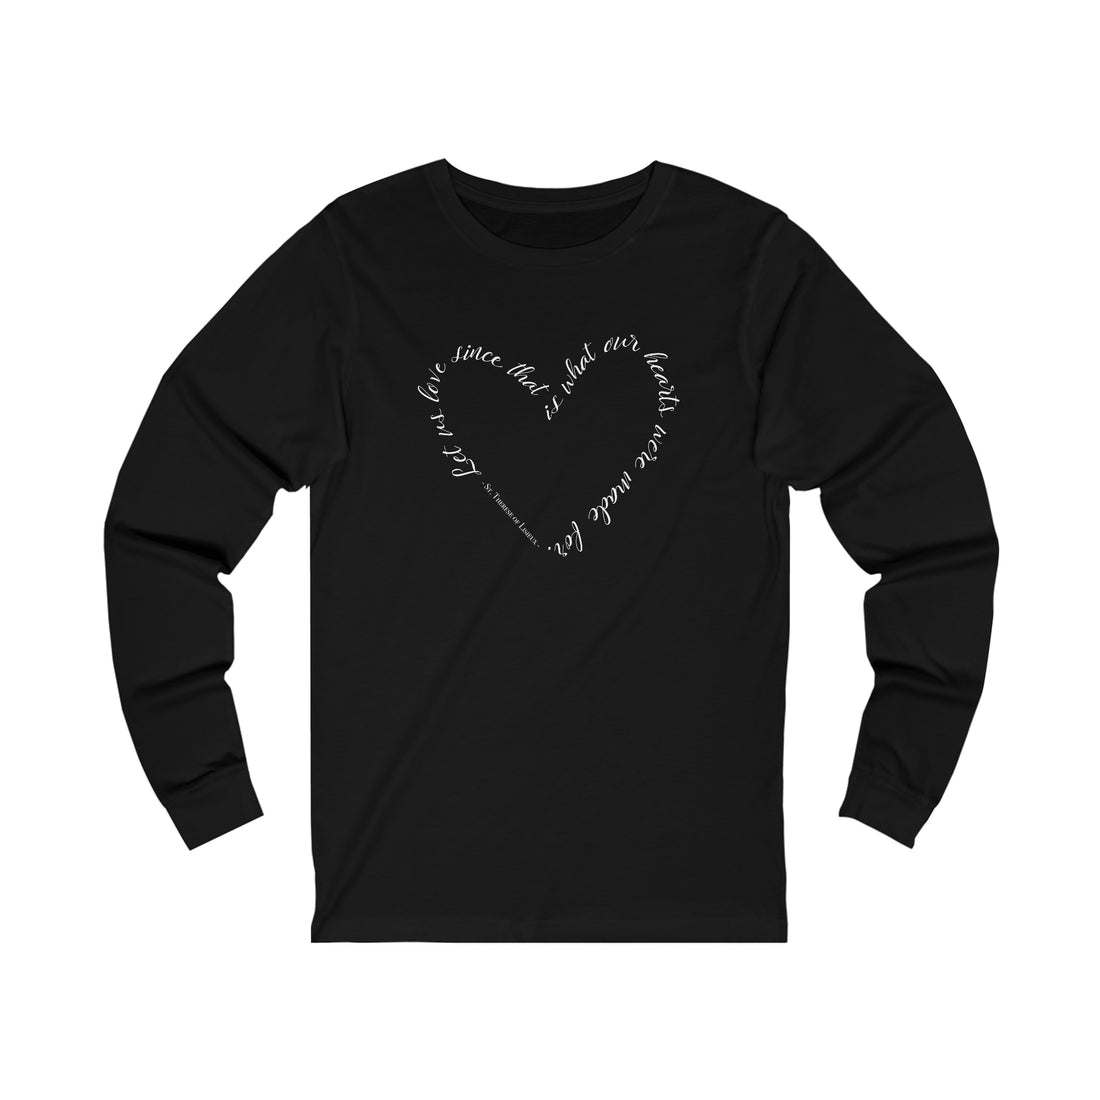 "Let Us Love" Long Sleeve Tshirt - Adoption Benefit